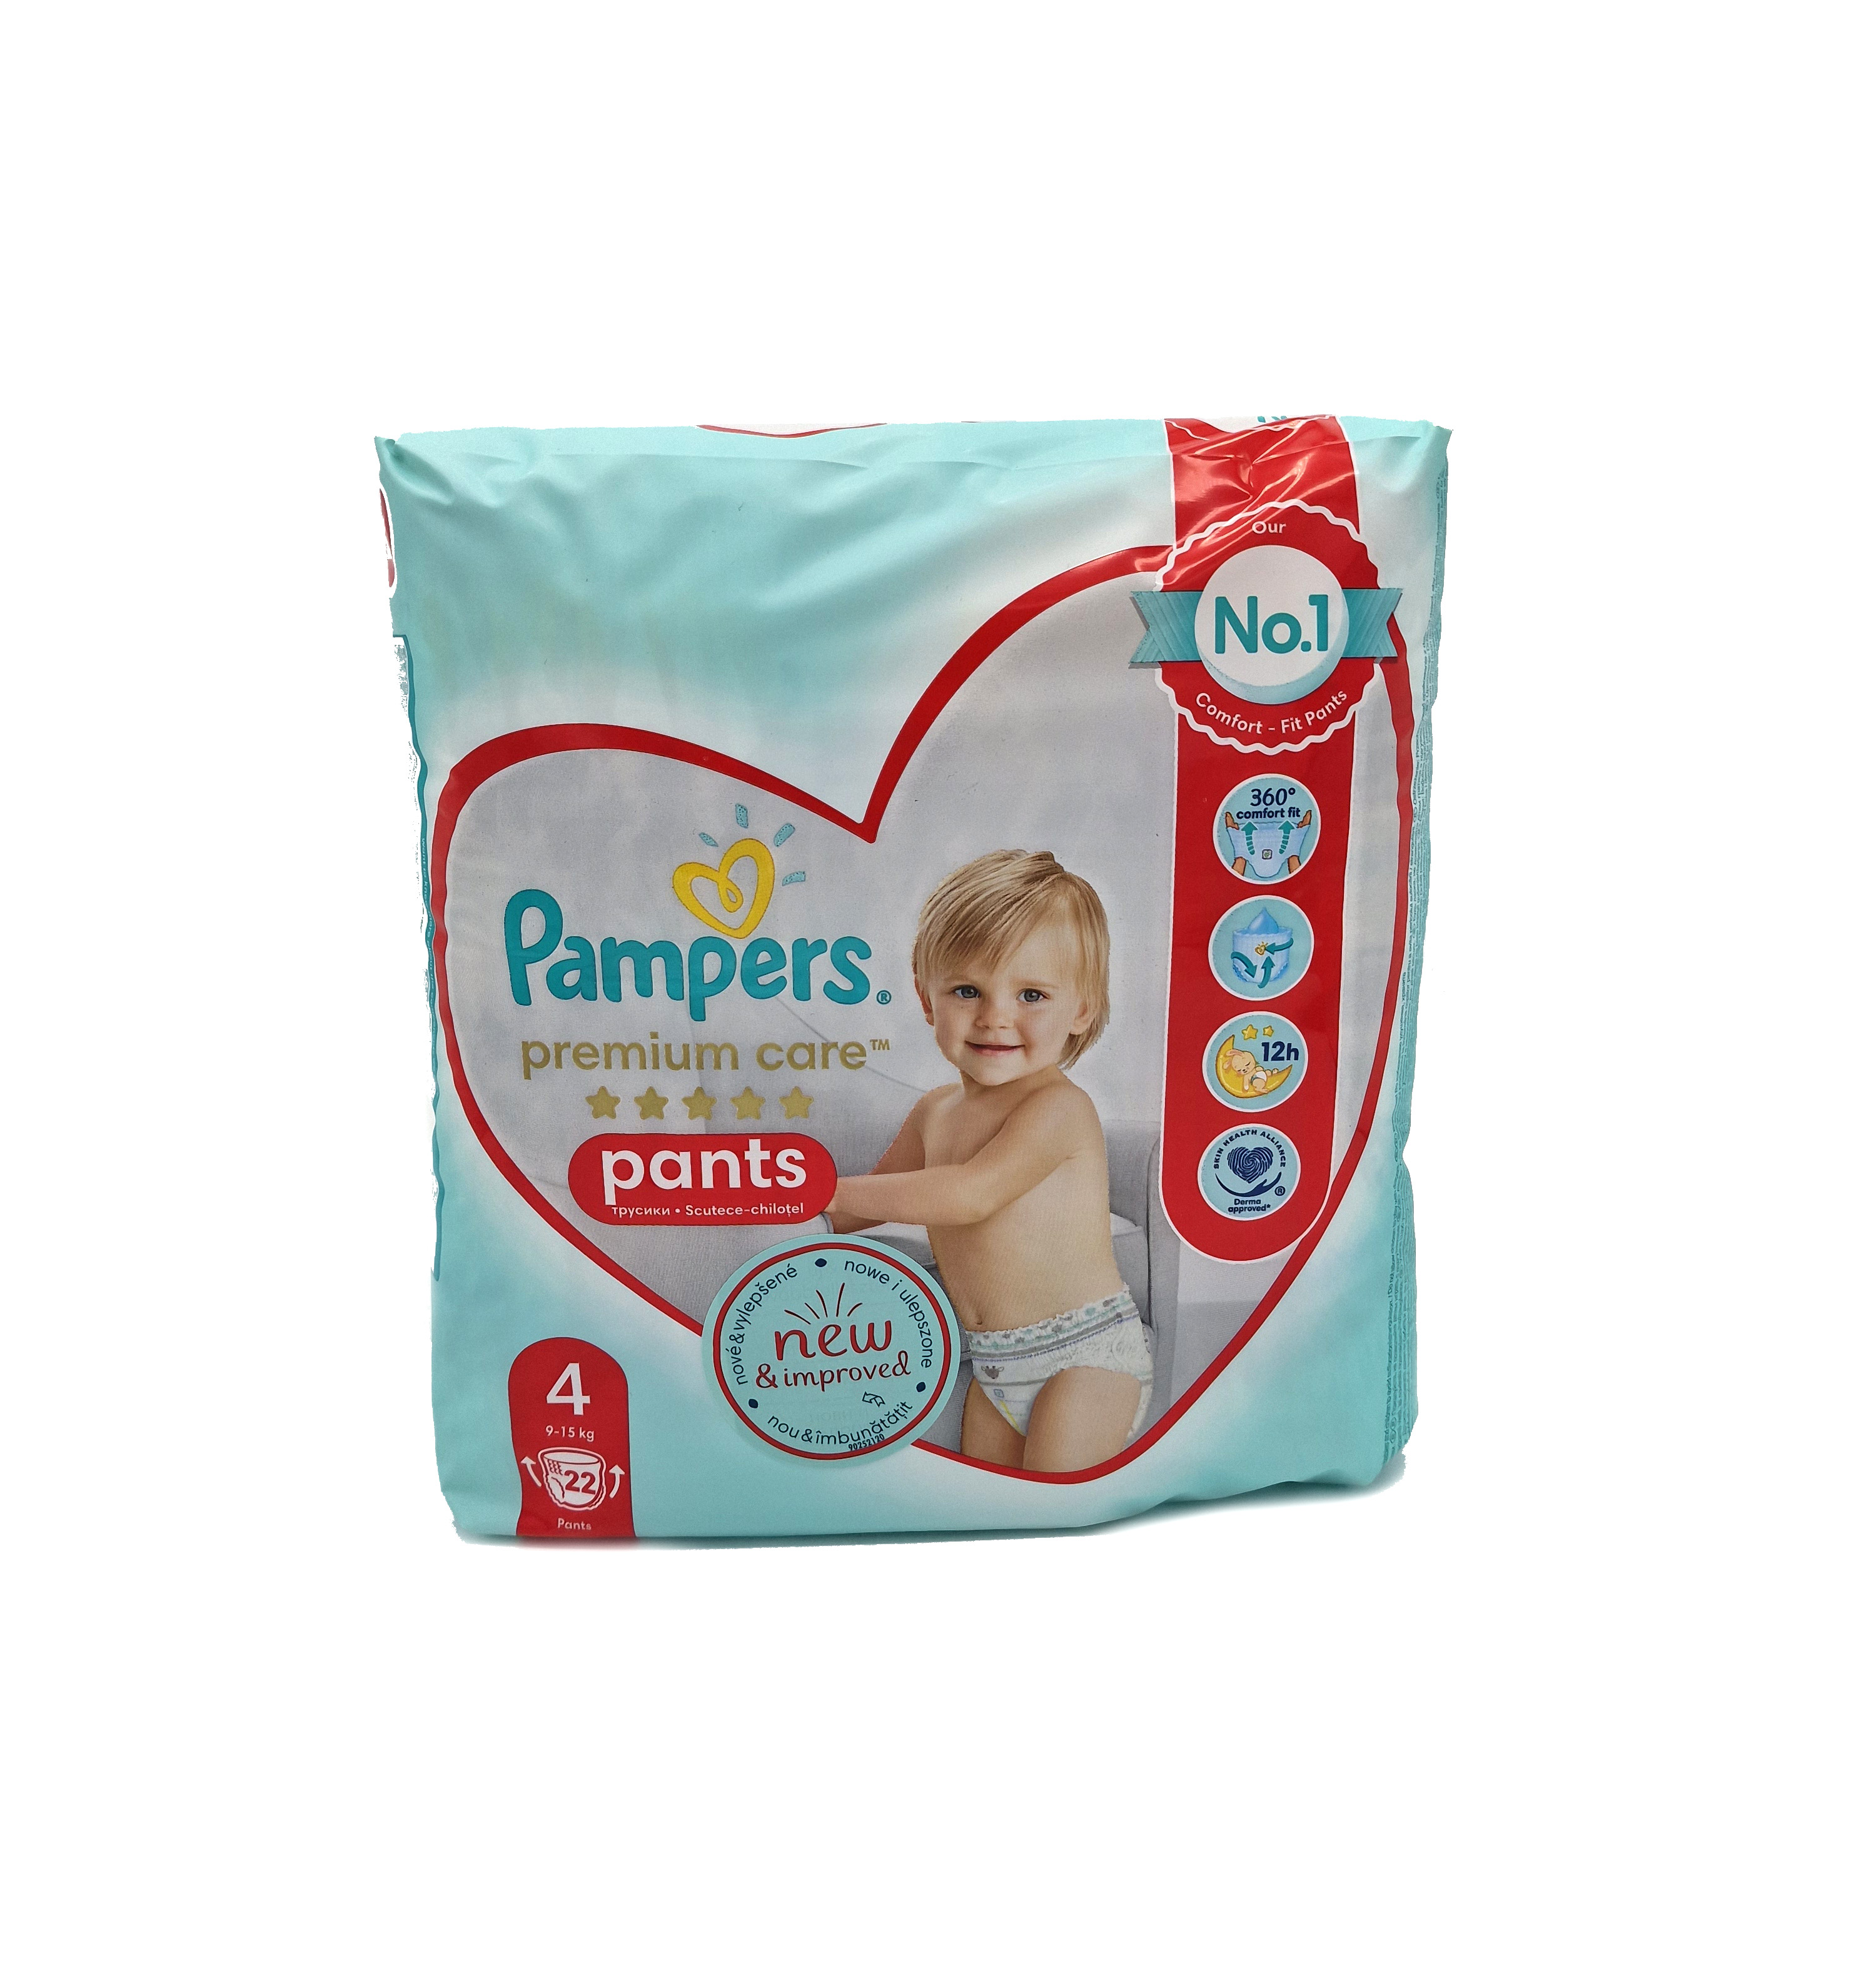 Pampers Pants Premium Care Windelhosen 22Stück Size 4 (9kg-15kg)